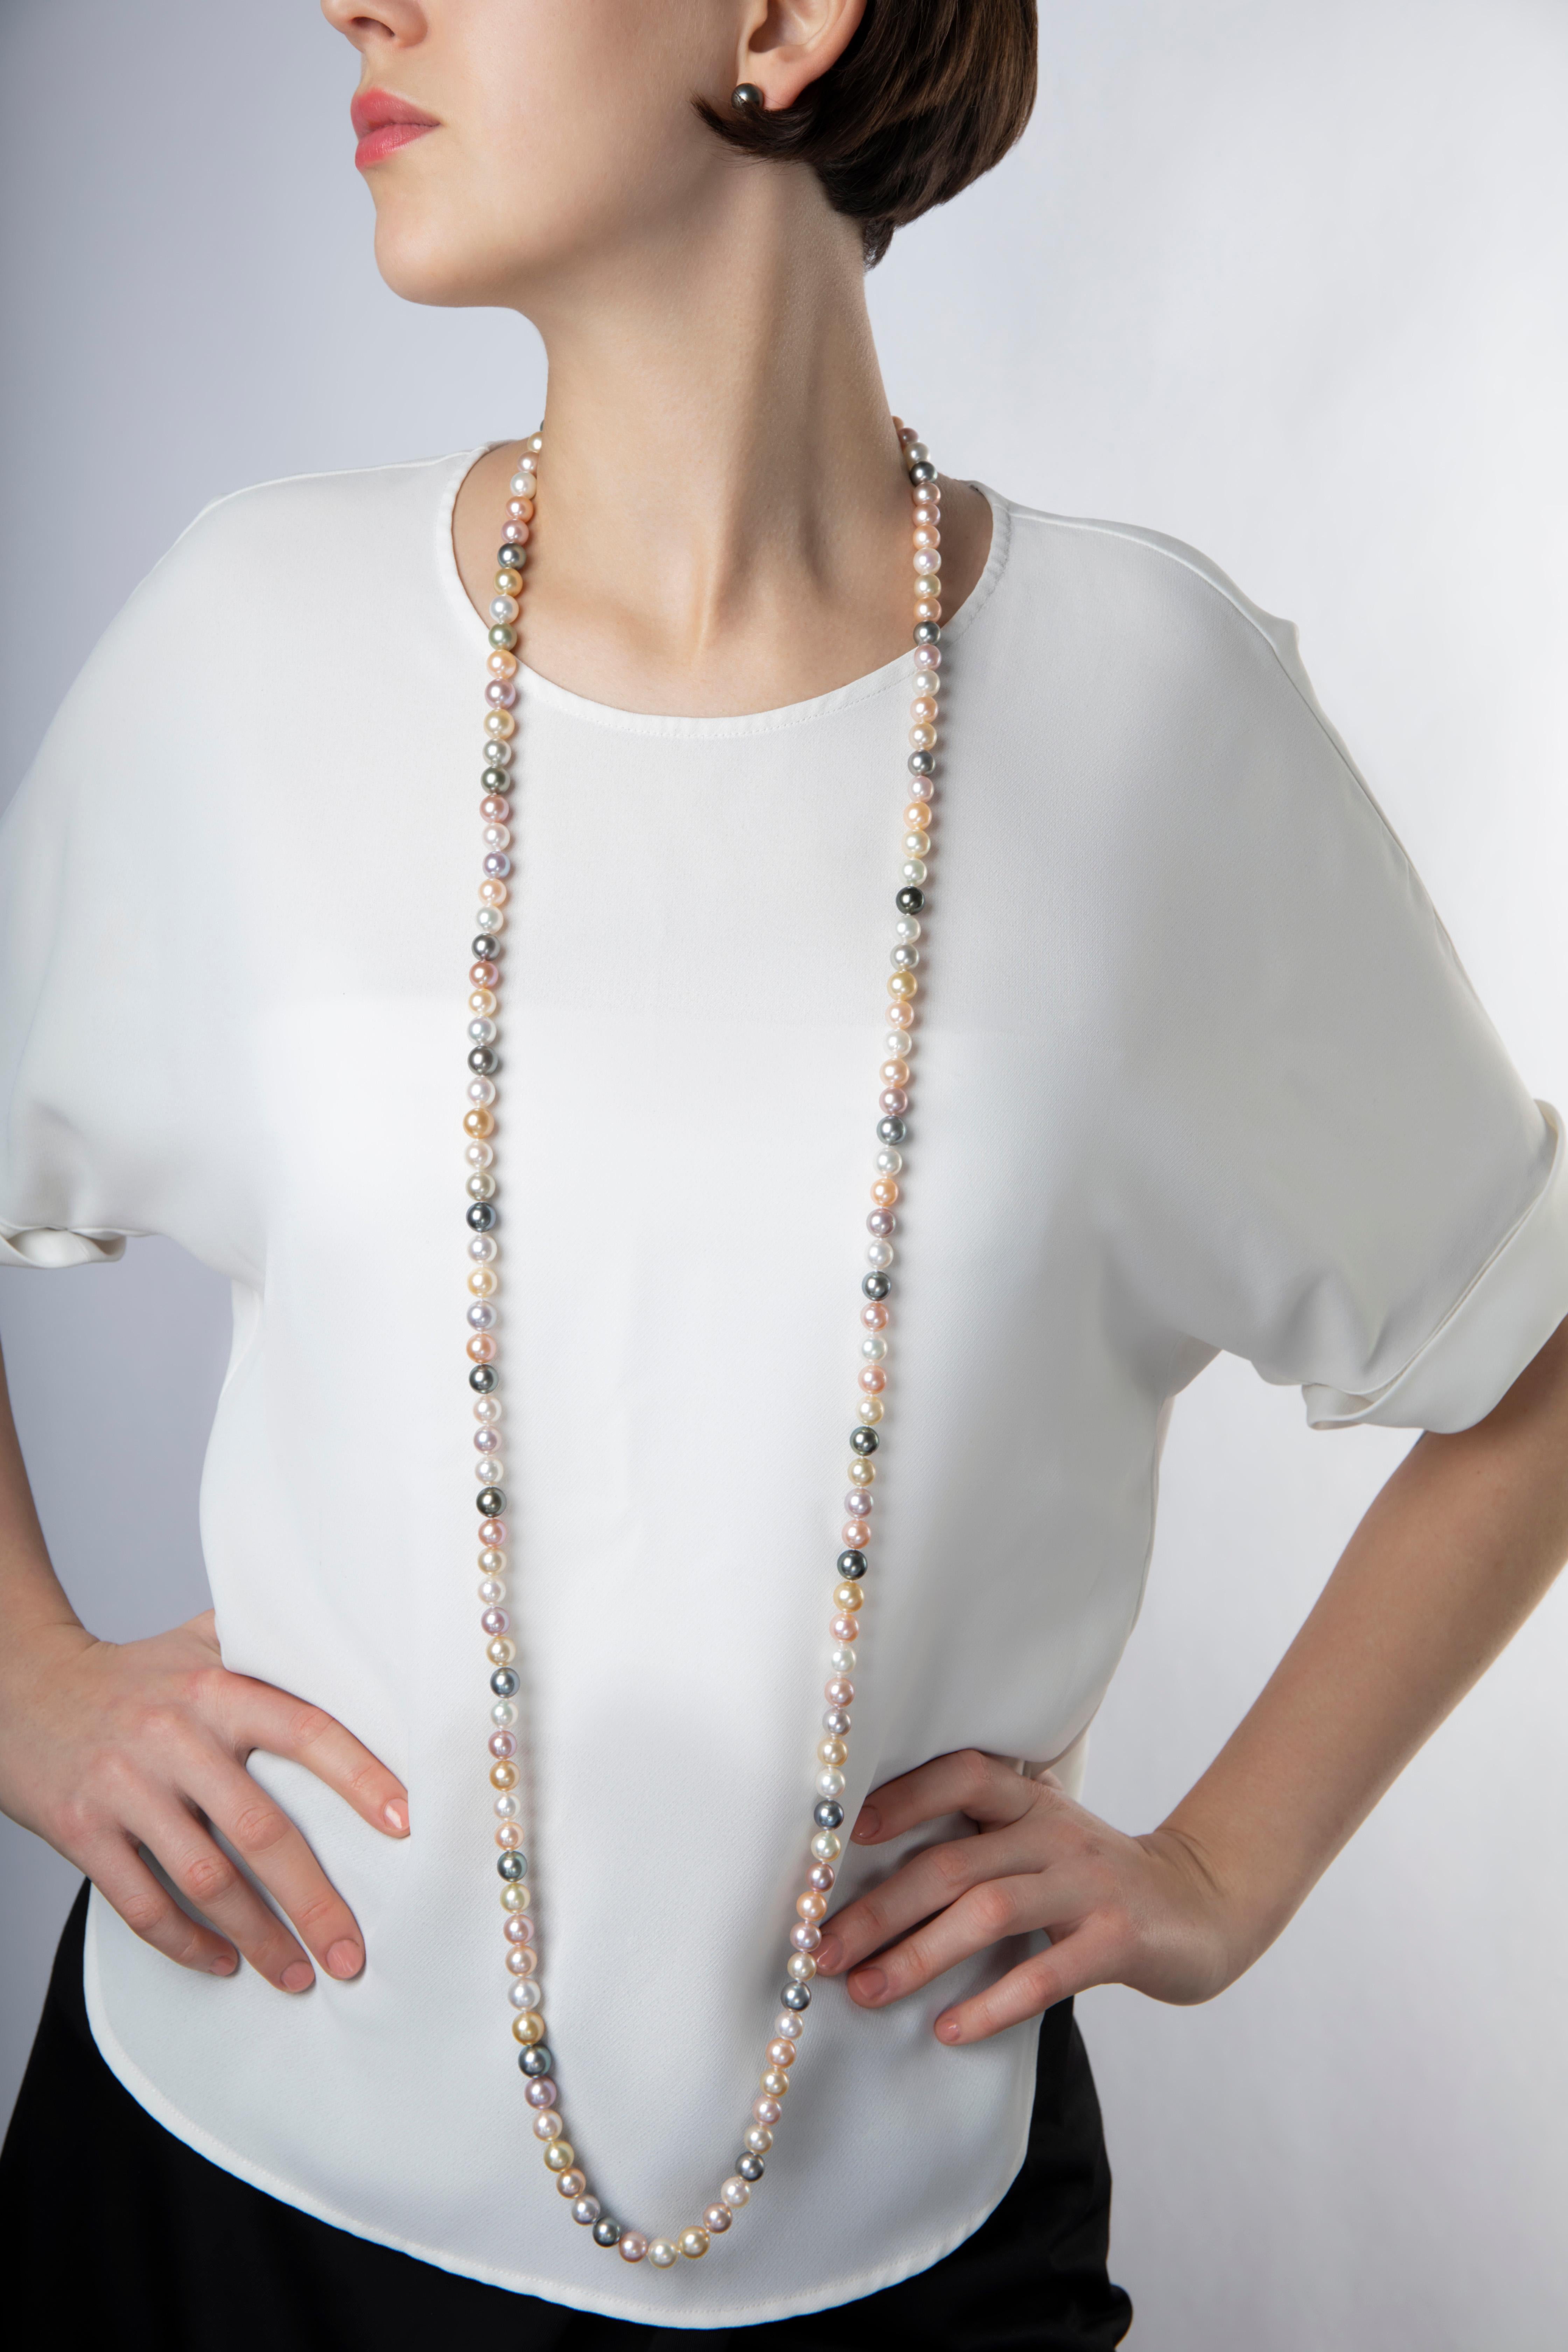 Yoko London Tahiti-, Südsee- und rosa Süßwasserperlen-Seil-Halskette (Perle) im Angebot